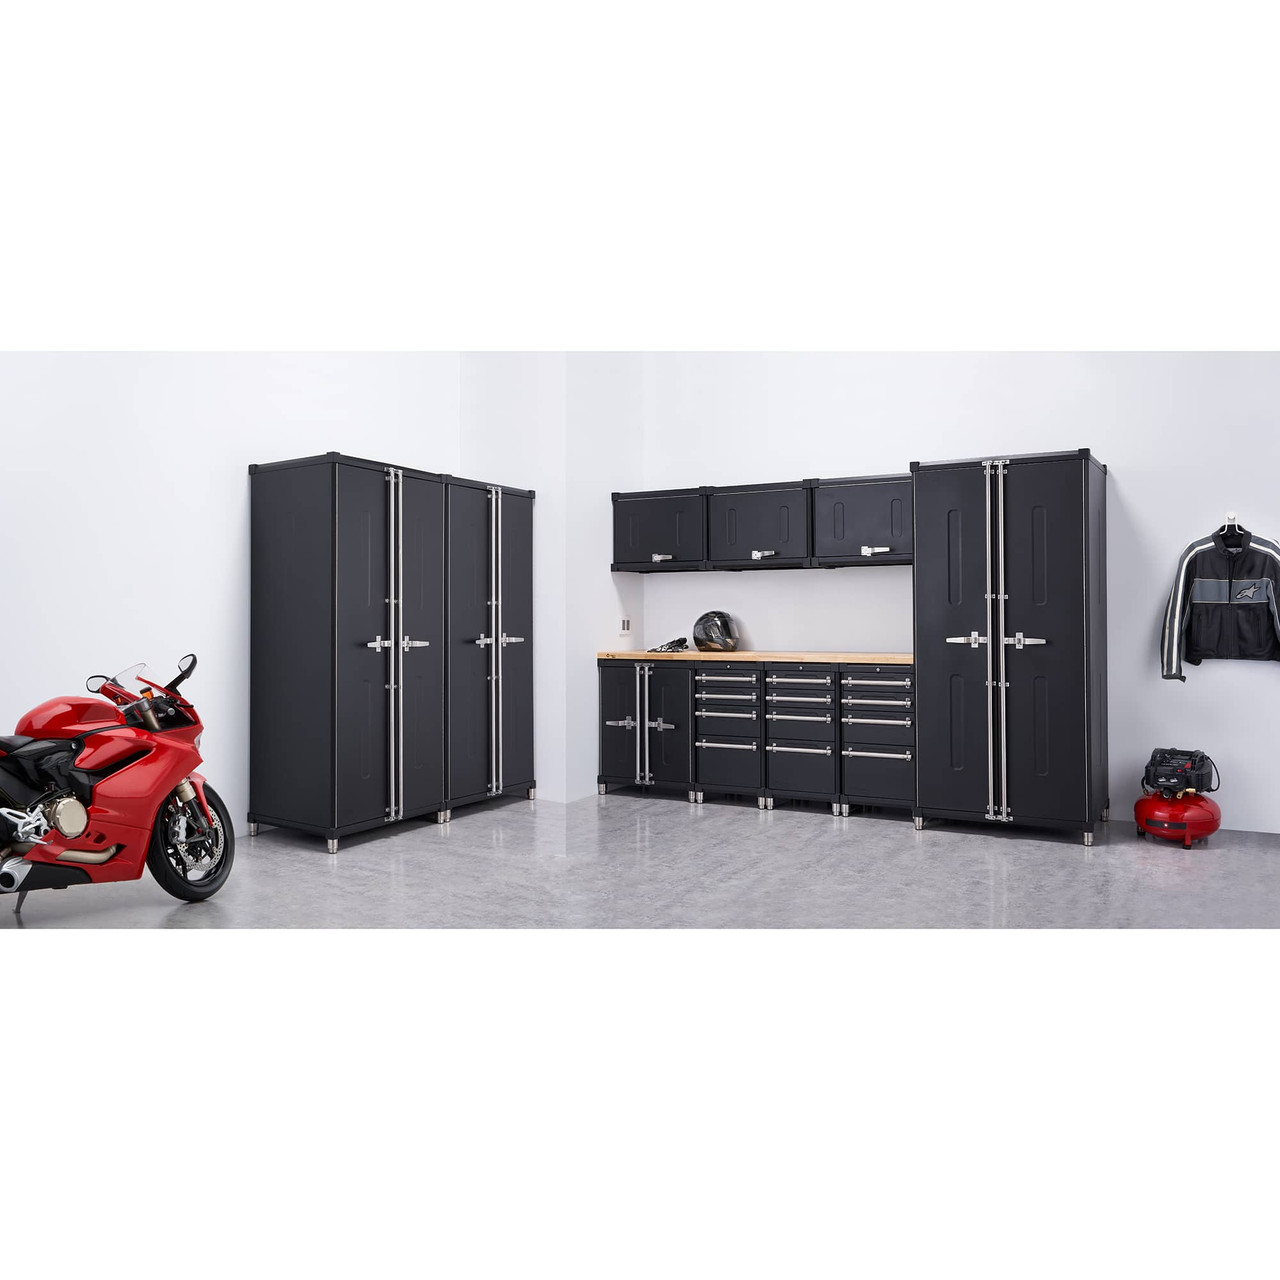 TRINITY PRO 4-Piece Garage Cabinet Set, Black